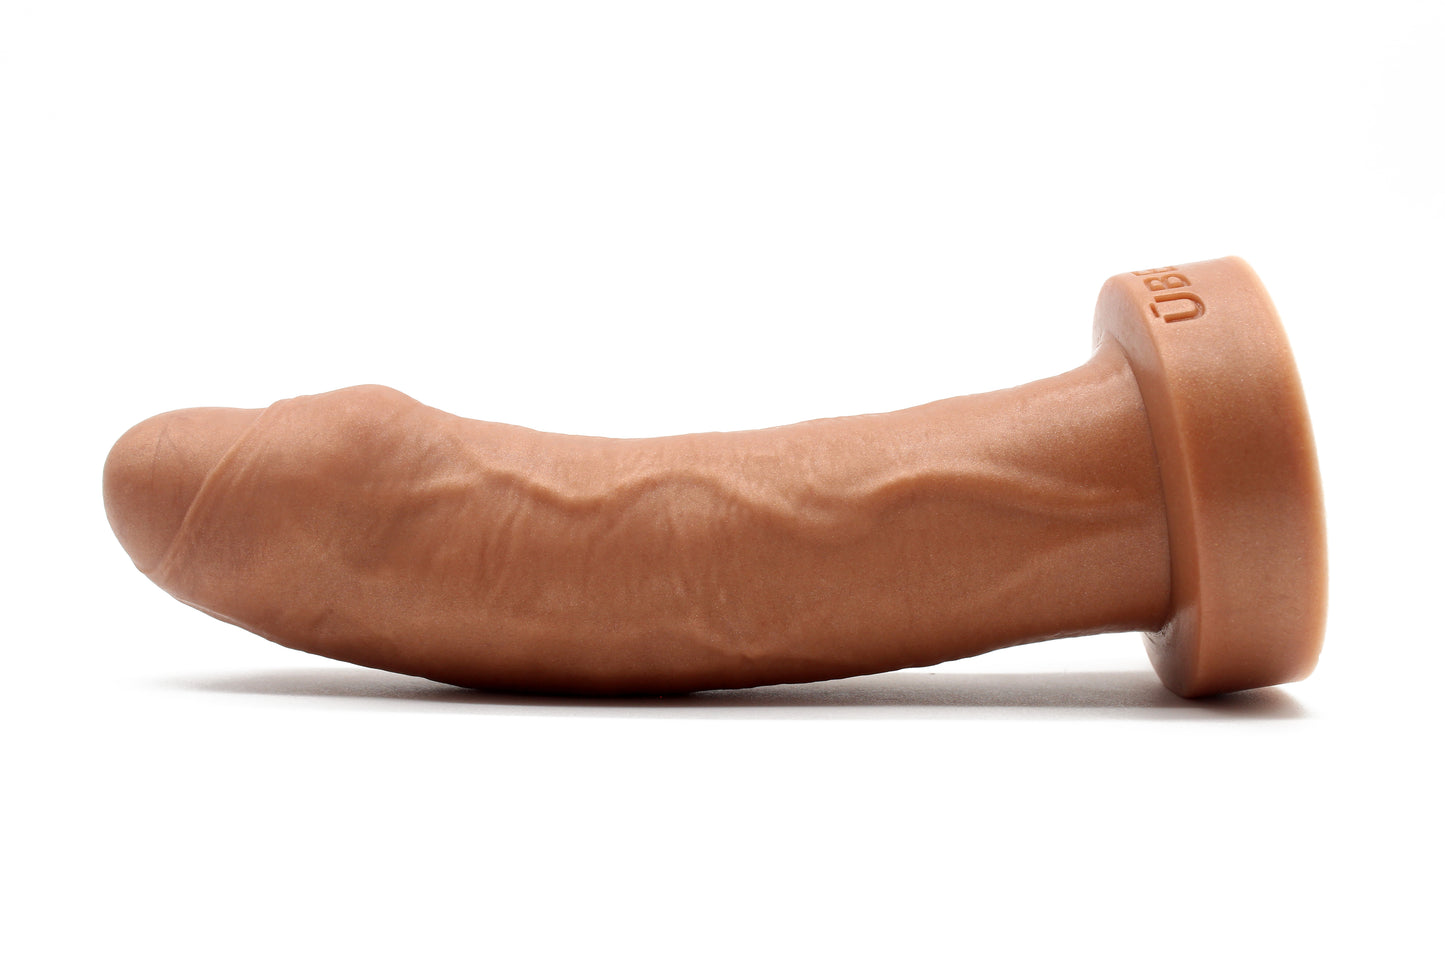 The Reservo Uncircumcised Dildo - Average Size